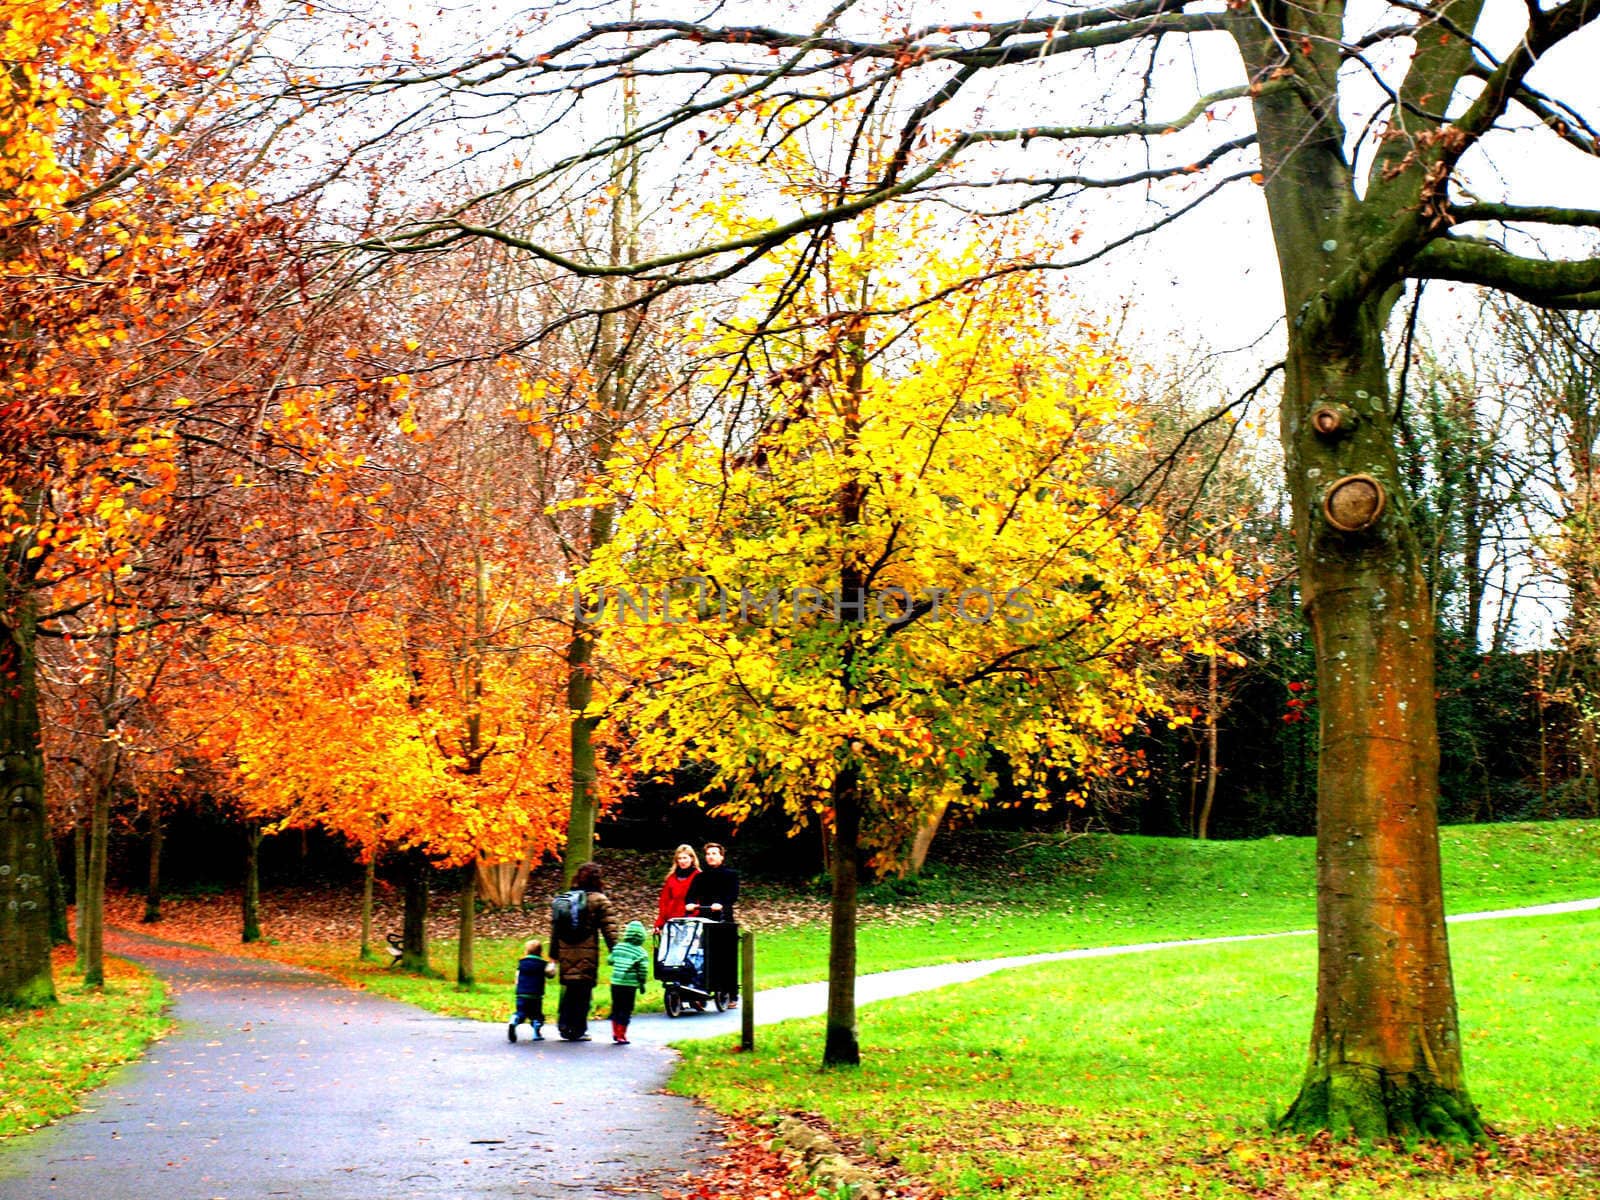 people walking in the park,November 2009 ,Bristol,Uk